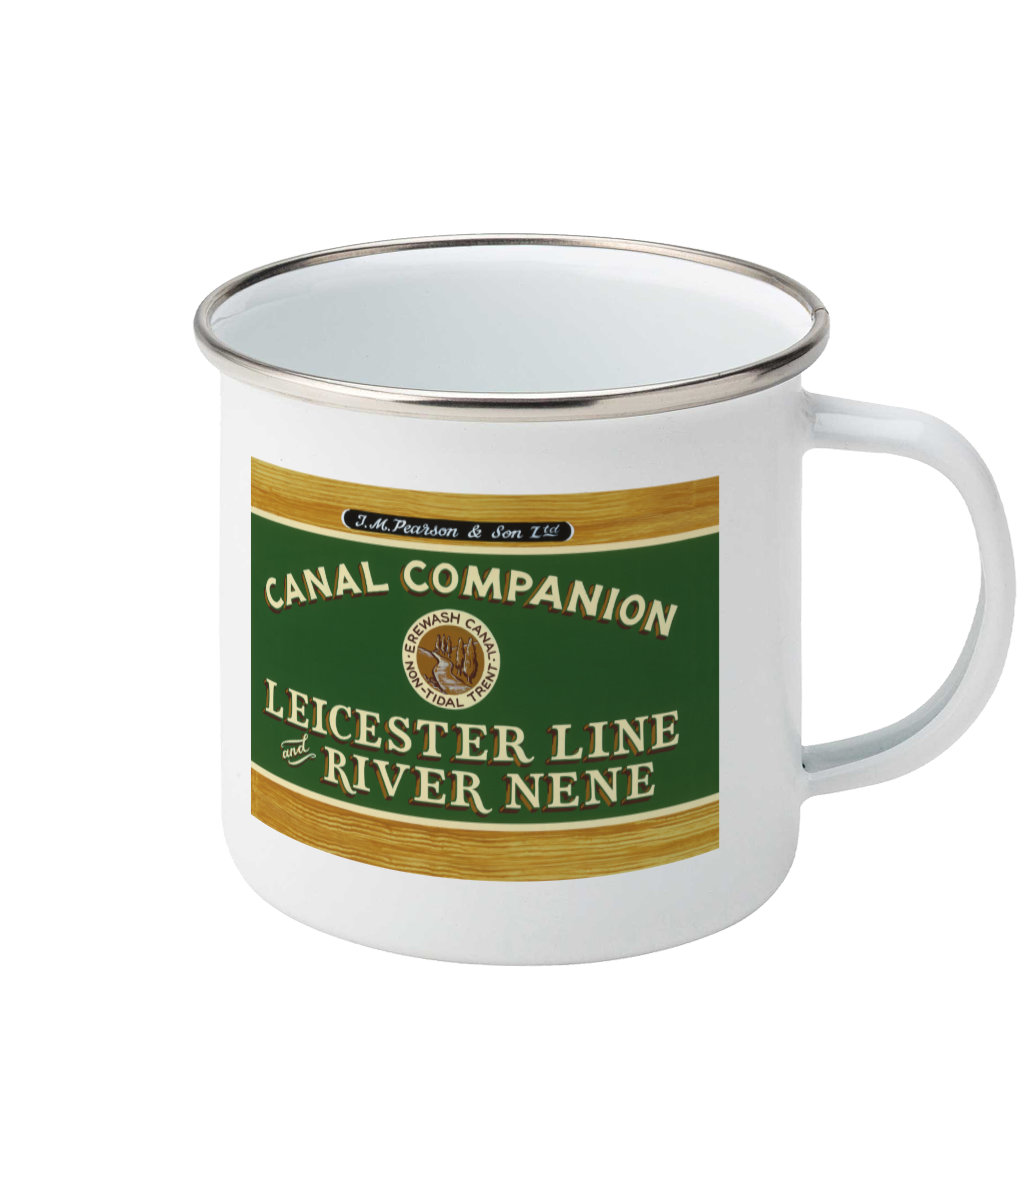 Pearson Canal Companion Enamel Mug - Leicester Line & River Nene